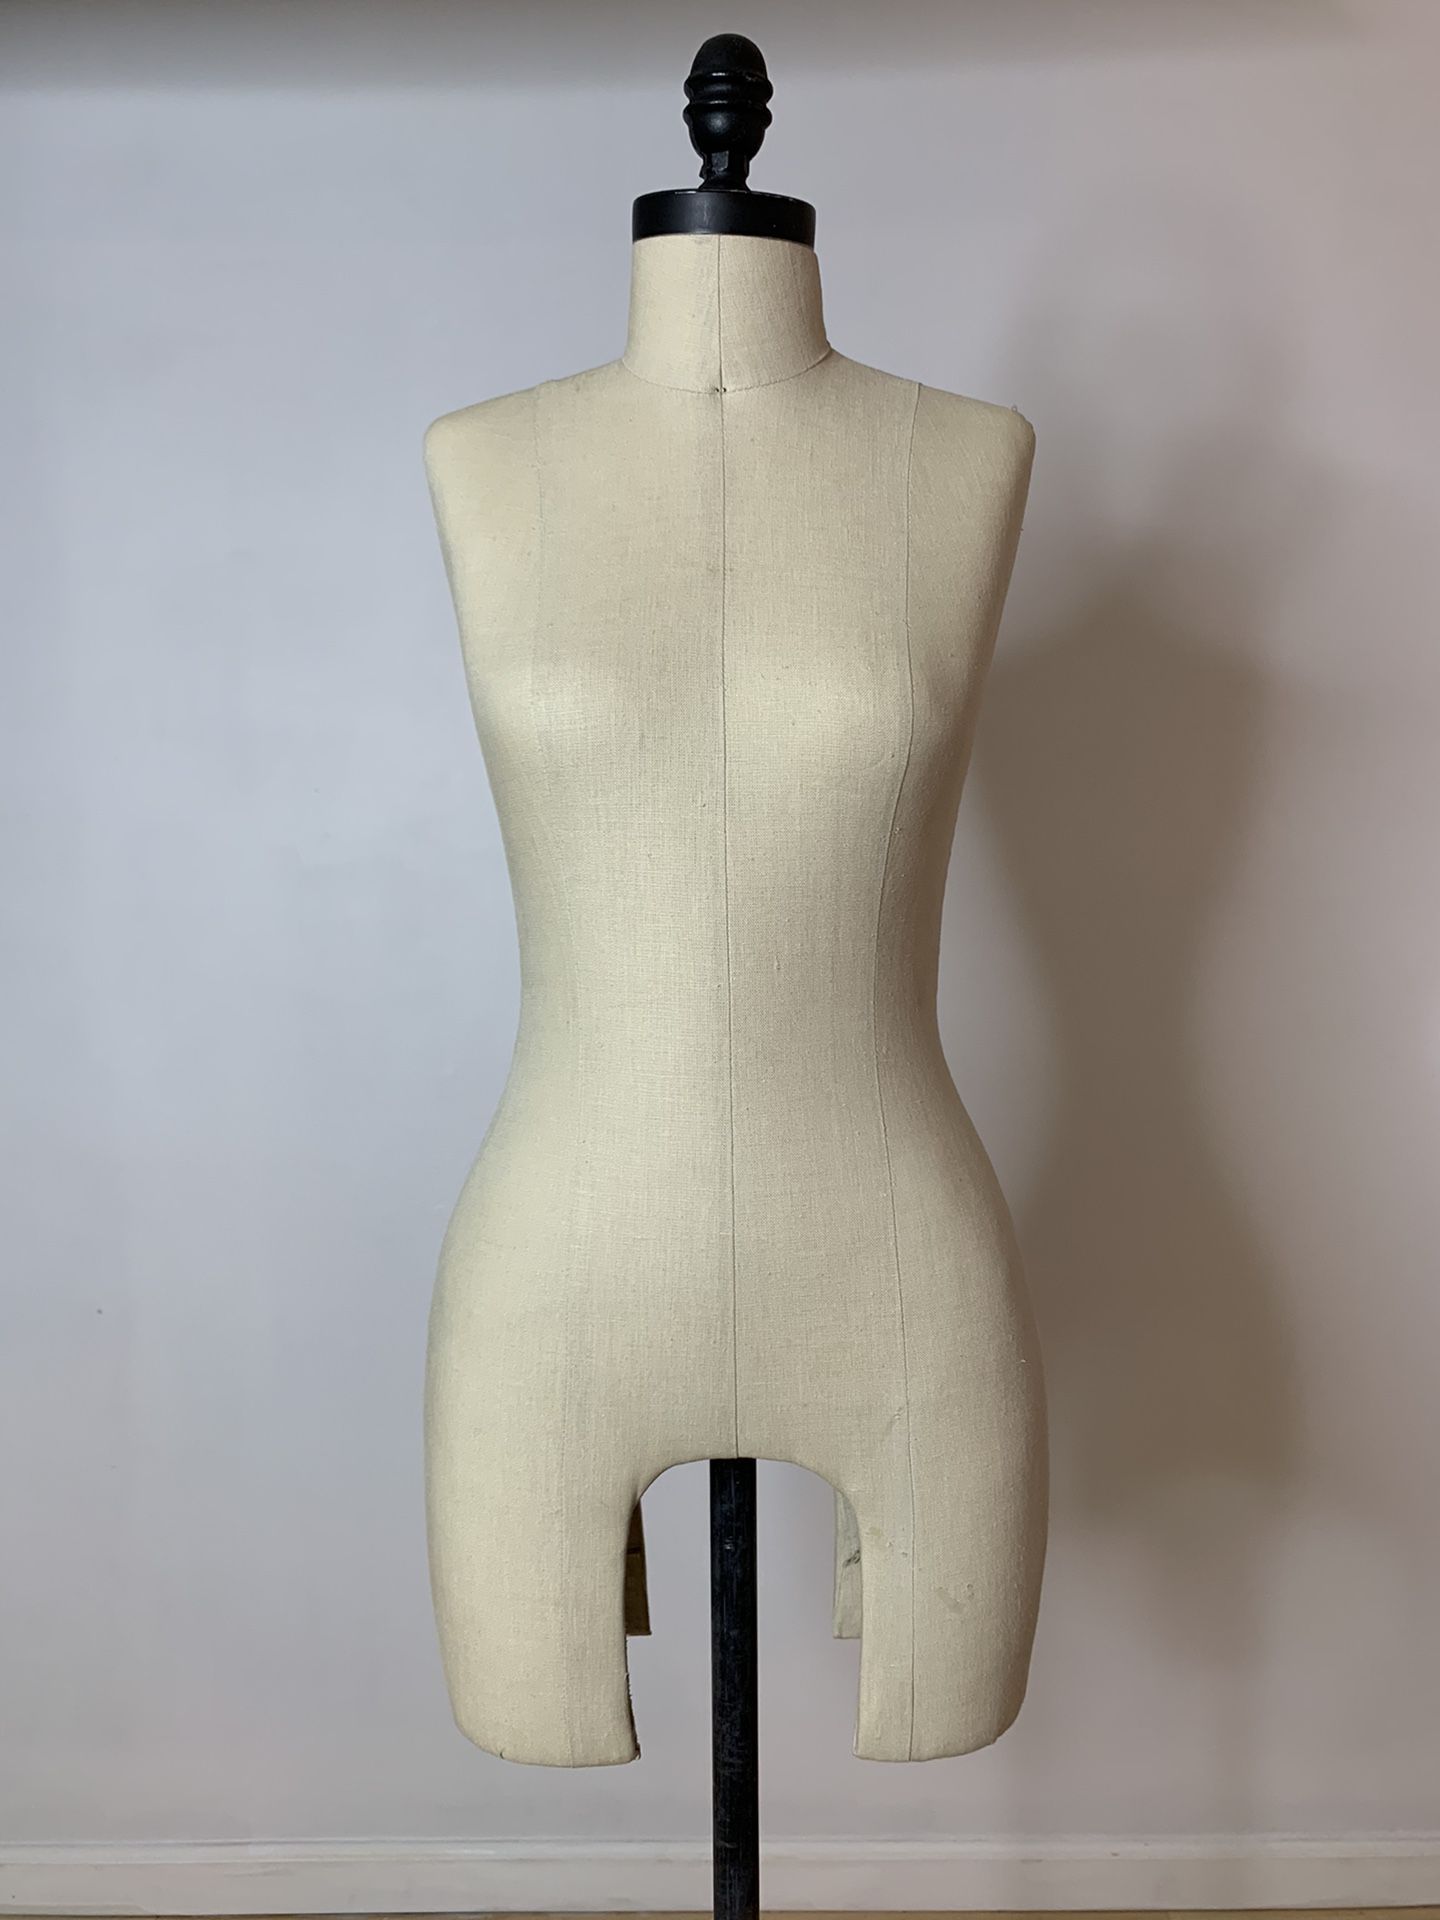 Professional Female Dress Form Mannequin w/ Black Rolling Bass